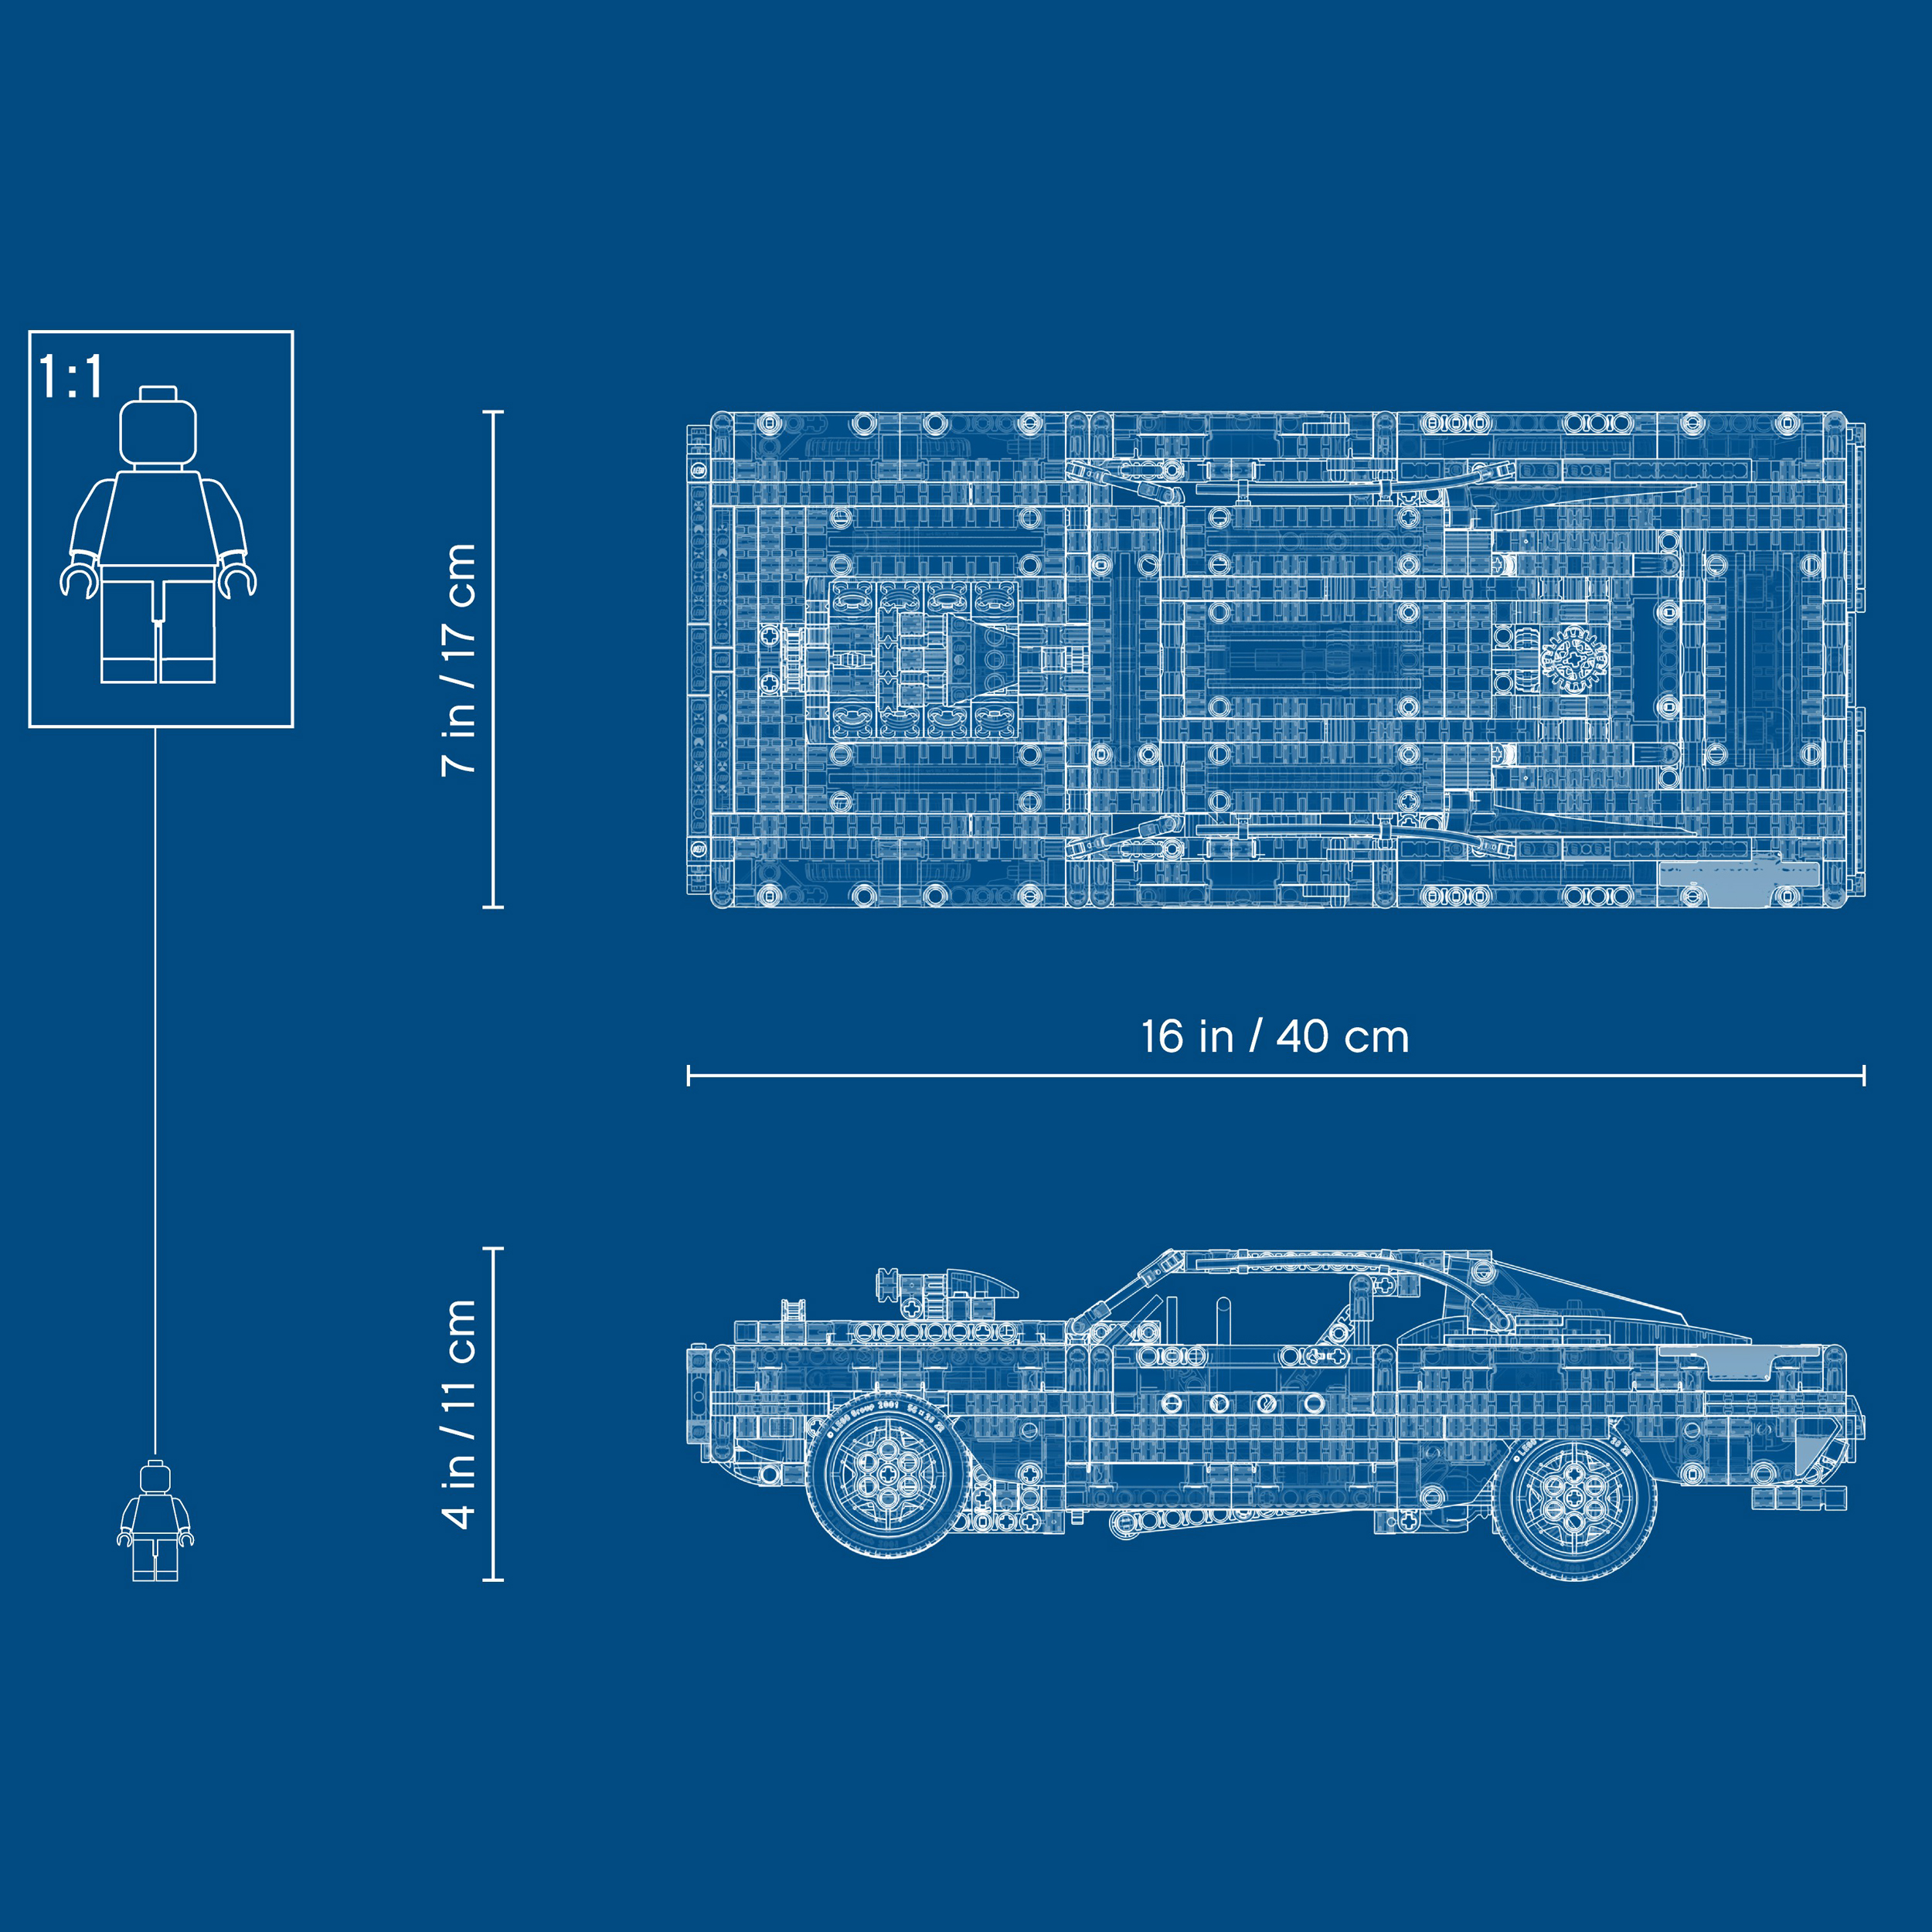 لگو سری Technic مدل Dom’s Dodge Charger 42111